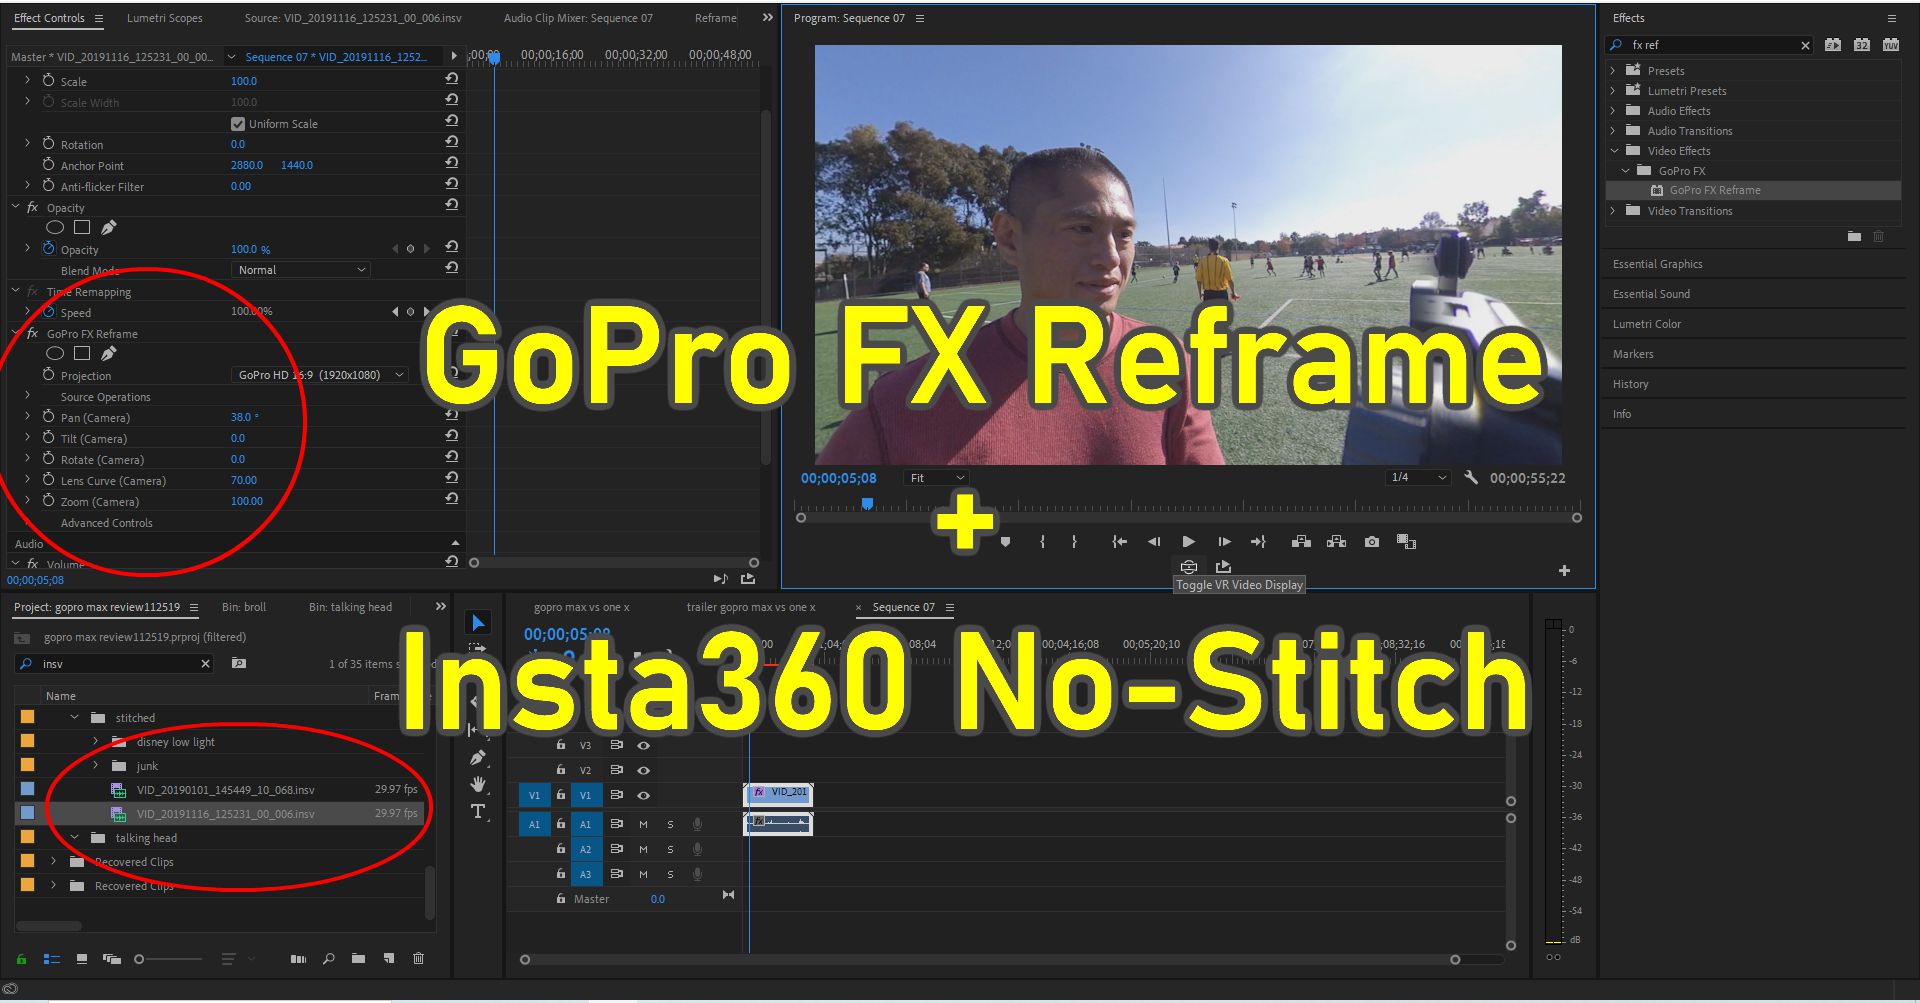 gennemførlig halt Minearbejder GoPro FX Reframe updated: now compatible with Insta360 No-Stitch Plugin -  360 Rumors